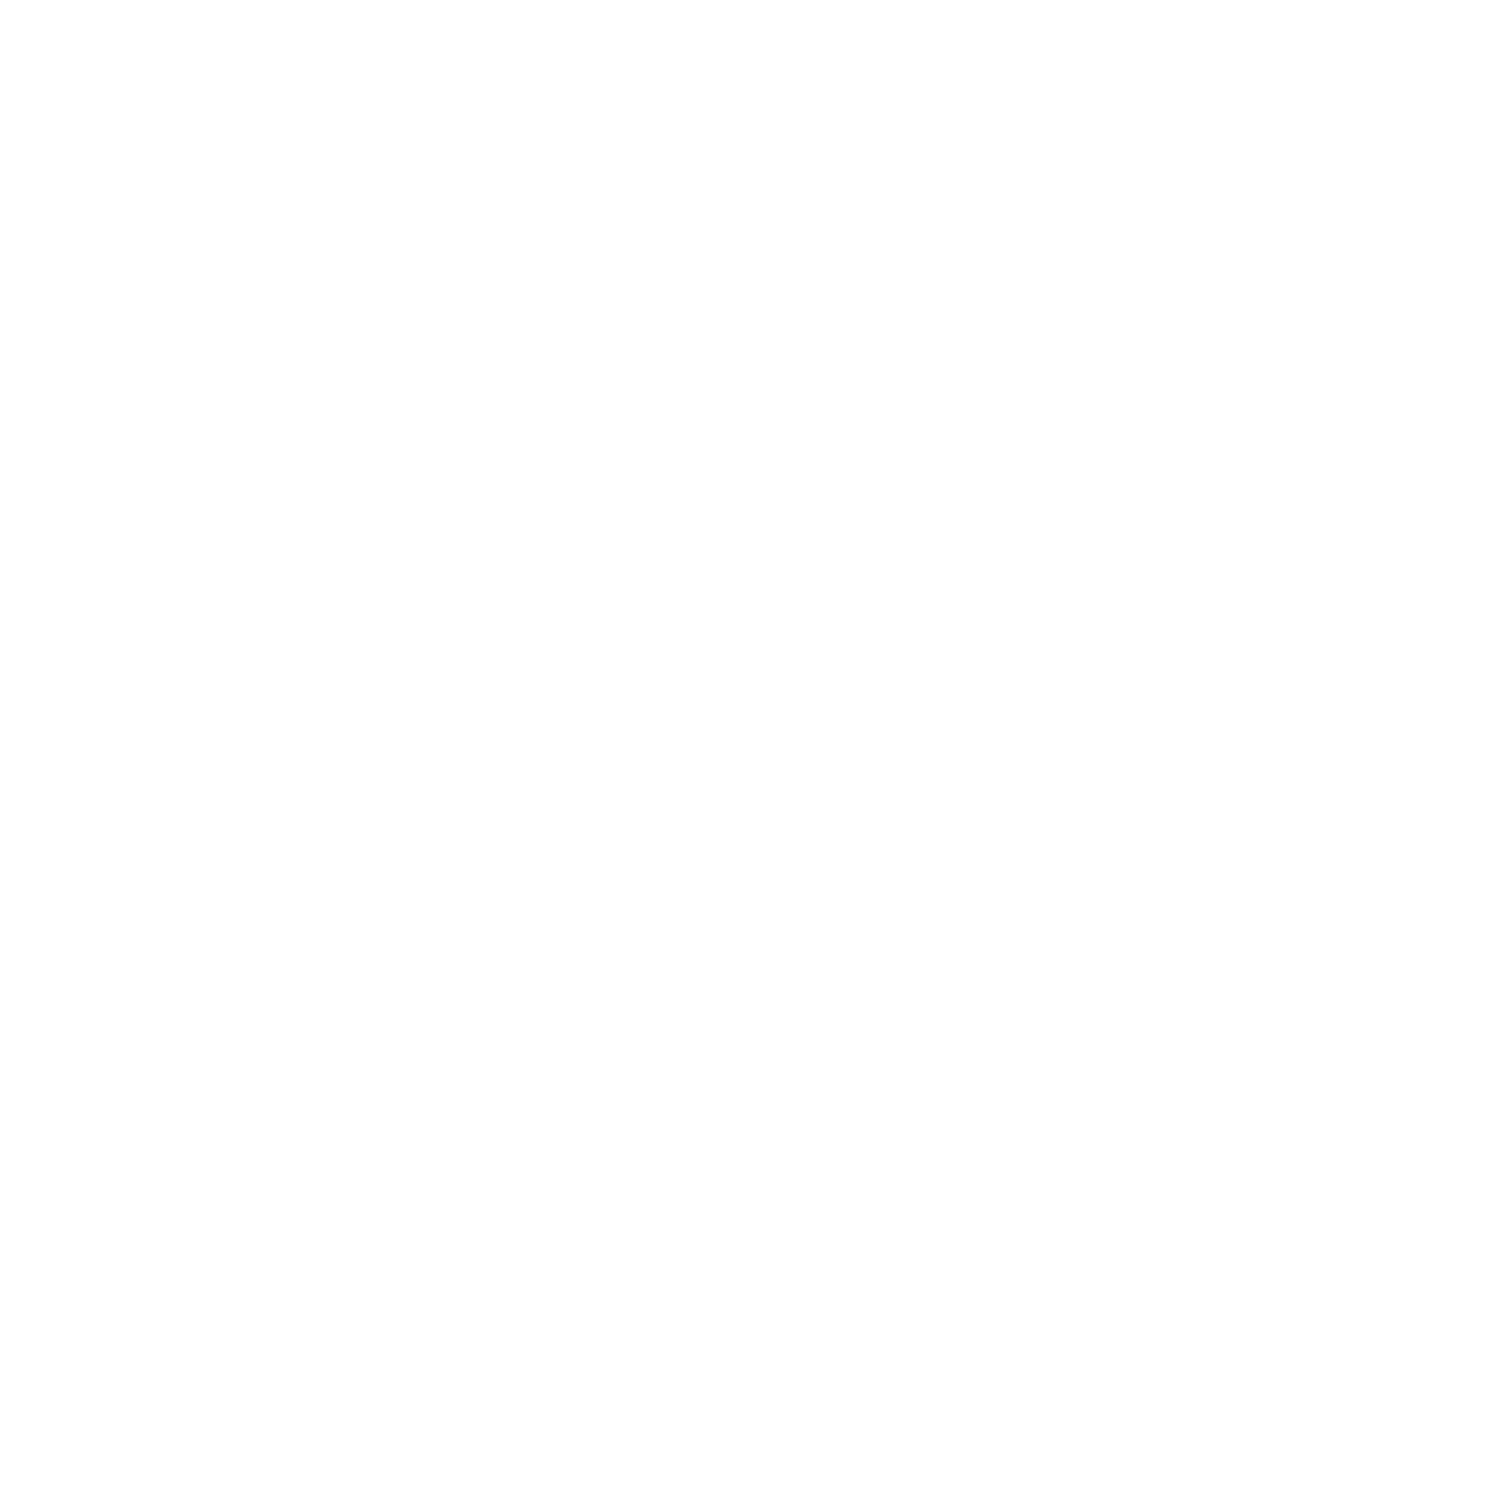 Caan Rose Estates Ltd - Slough